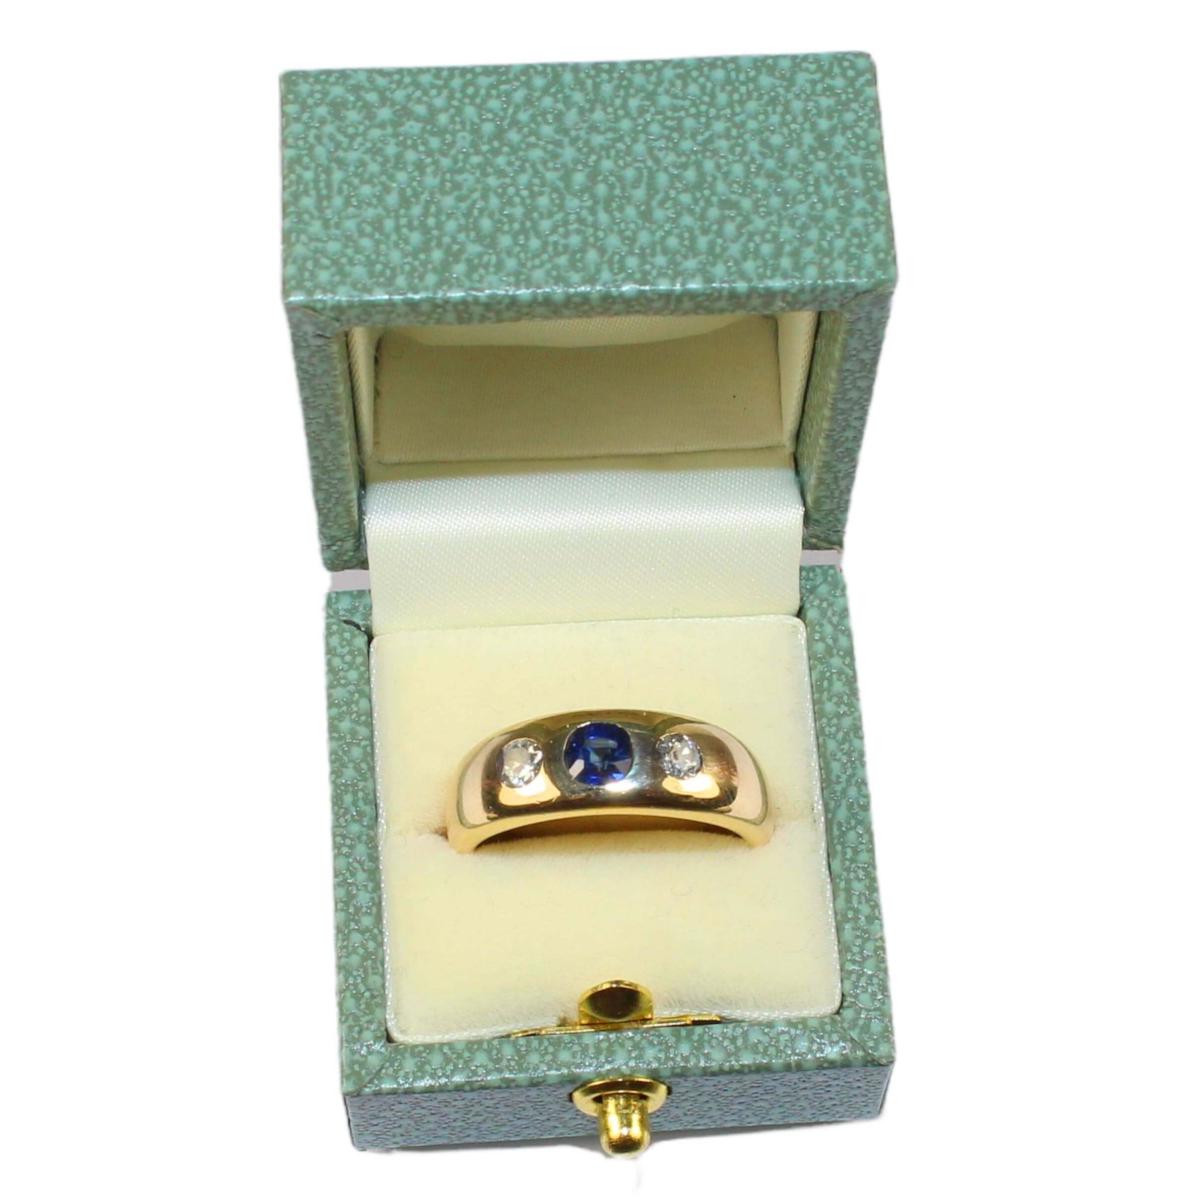 Edwardian Sapphire and Diamond Gypsy Ring circa 1919